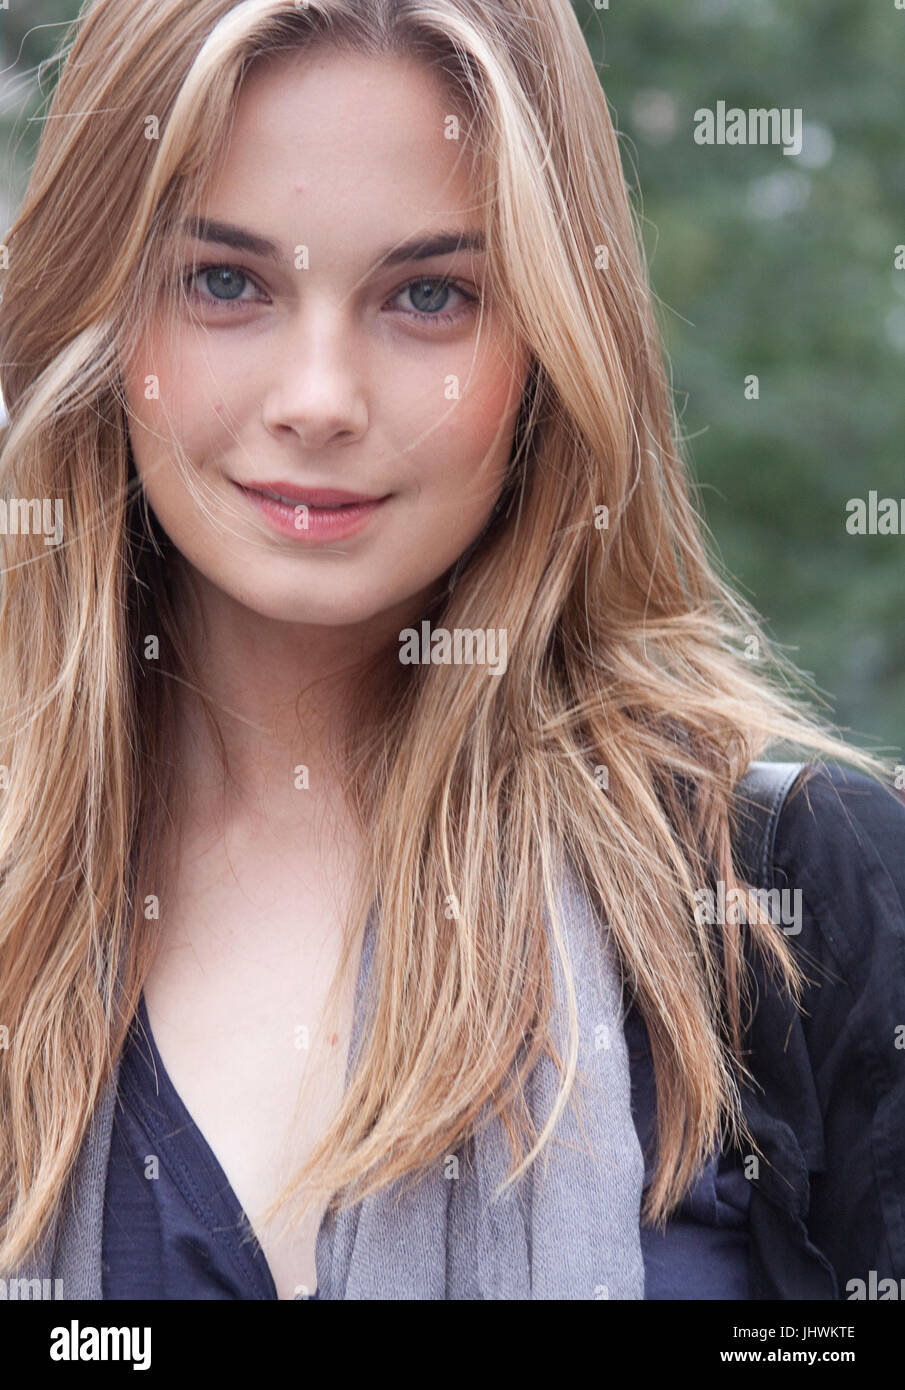 Beautiful Glowing skin Professional Makeup beauty portrait of Fashion model during New York Fashion Week Stock Photo